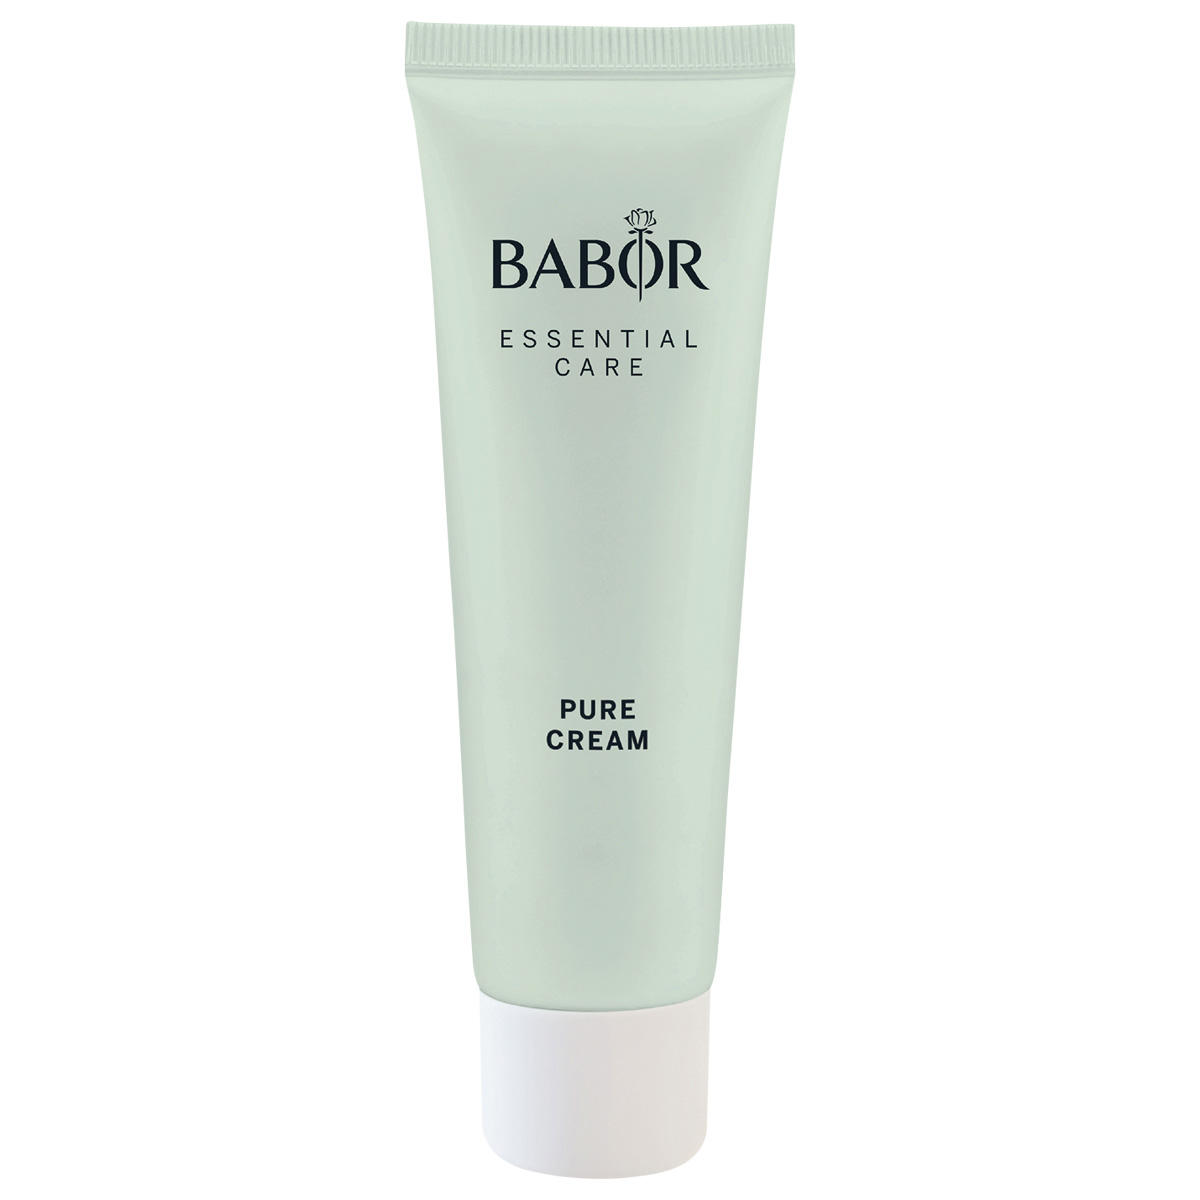 BABOR ESSENTIAL CARE Pure Cream 50 ml - 1